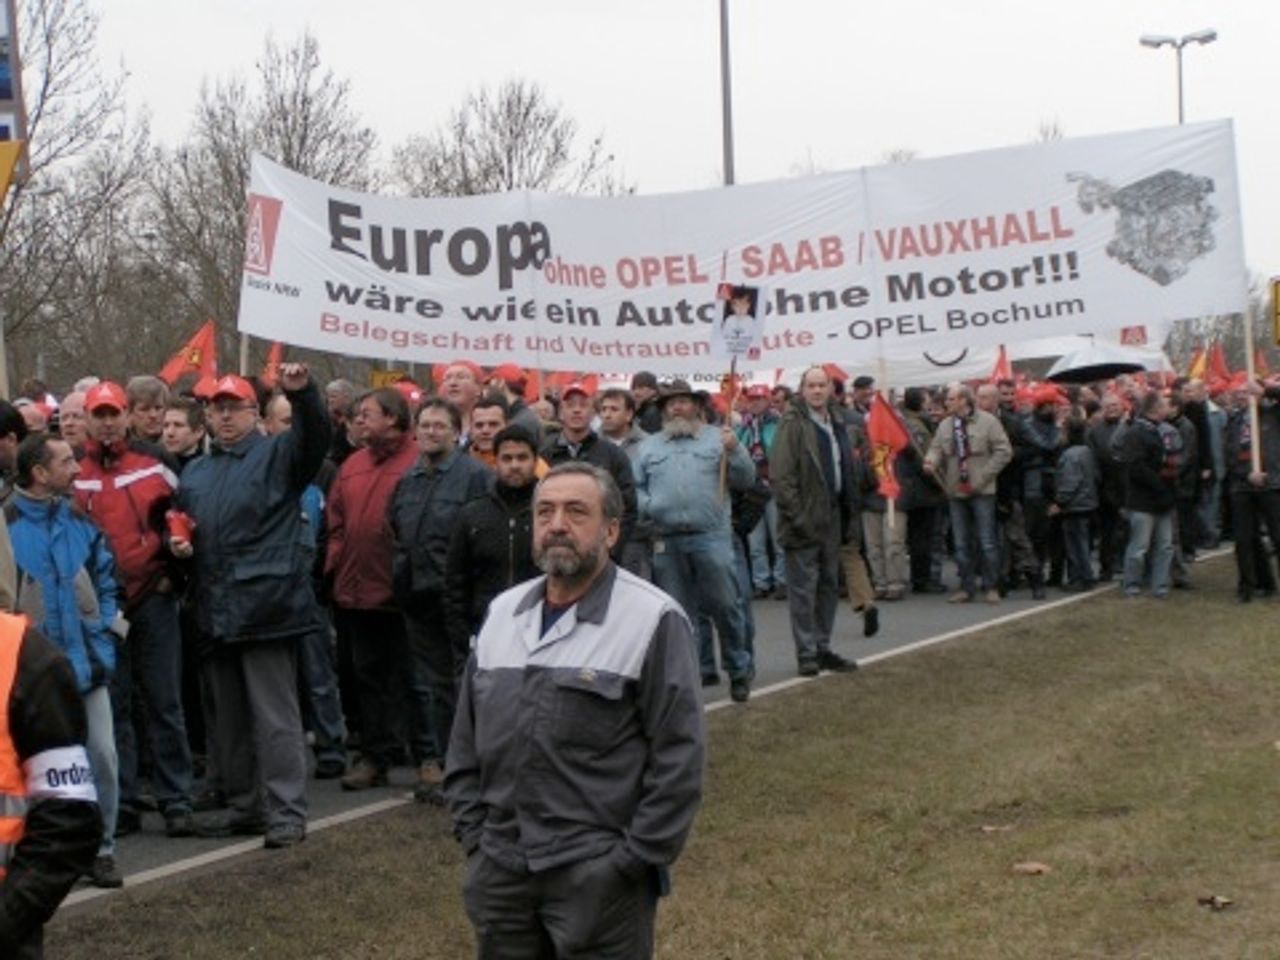 Demonstrators in Rüsselsheim